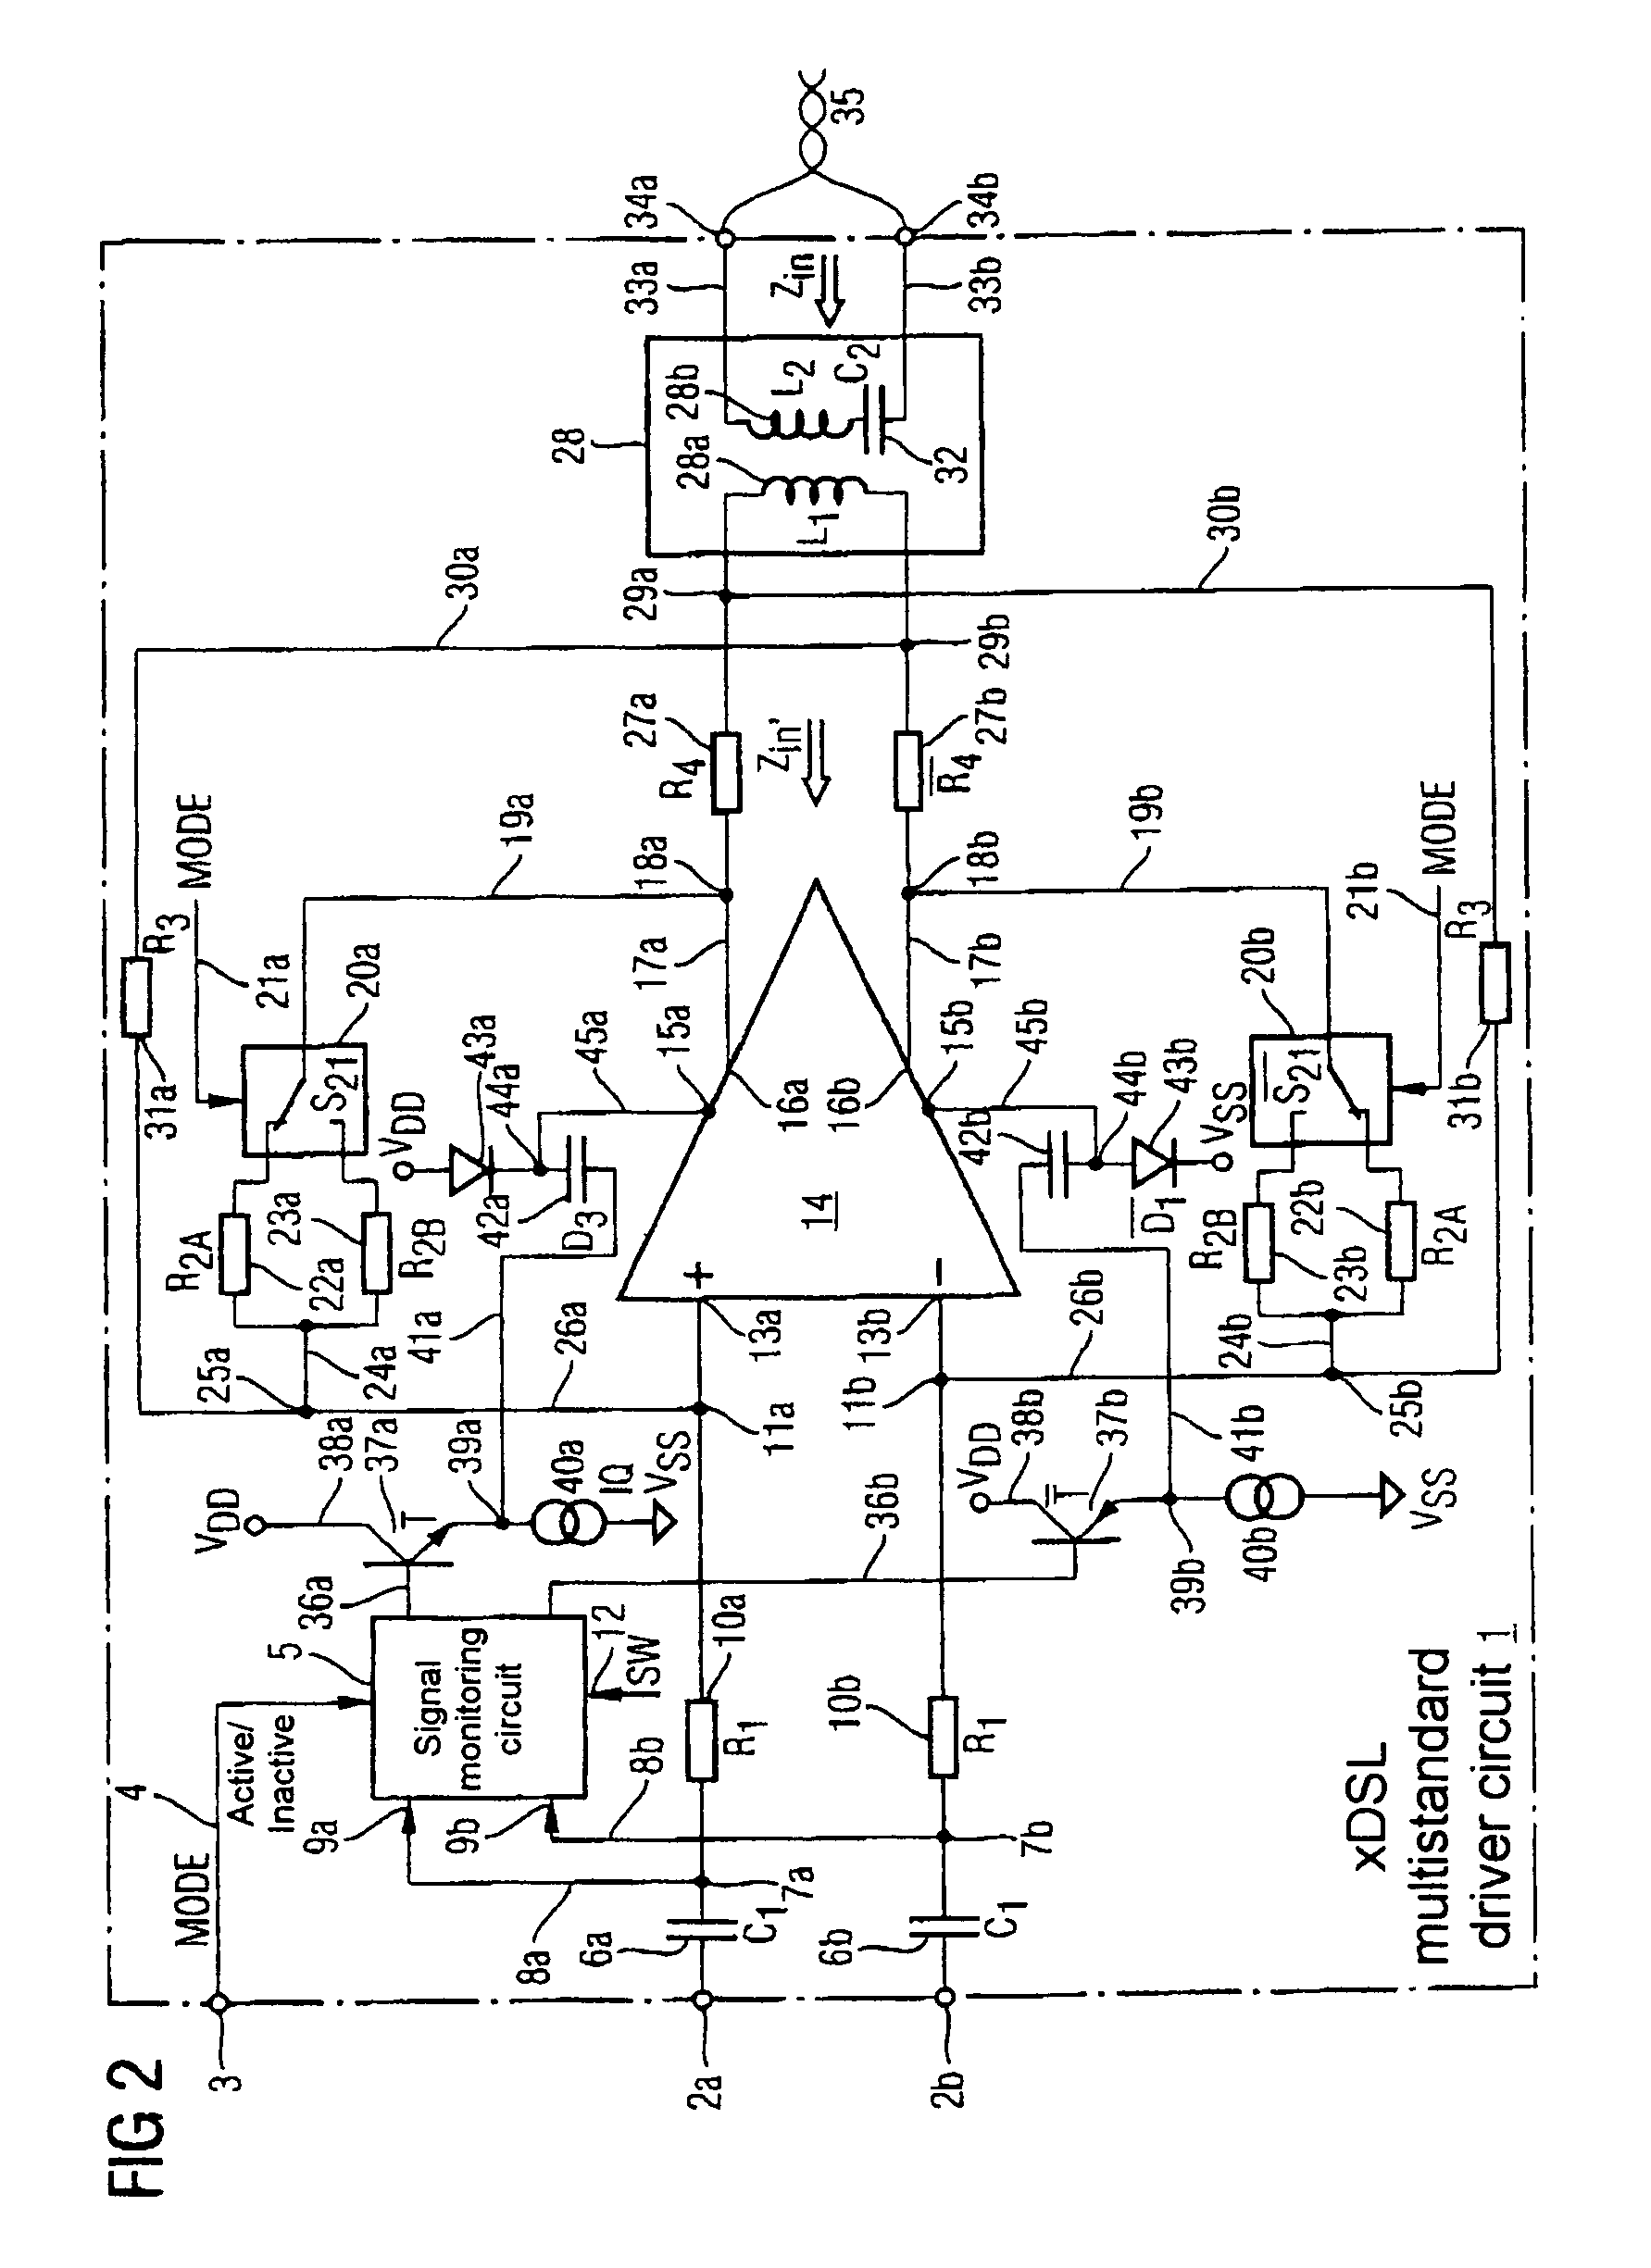 xDSL multistandard driver circuit